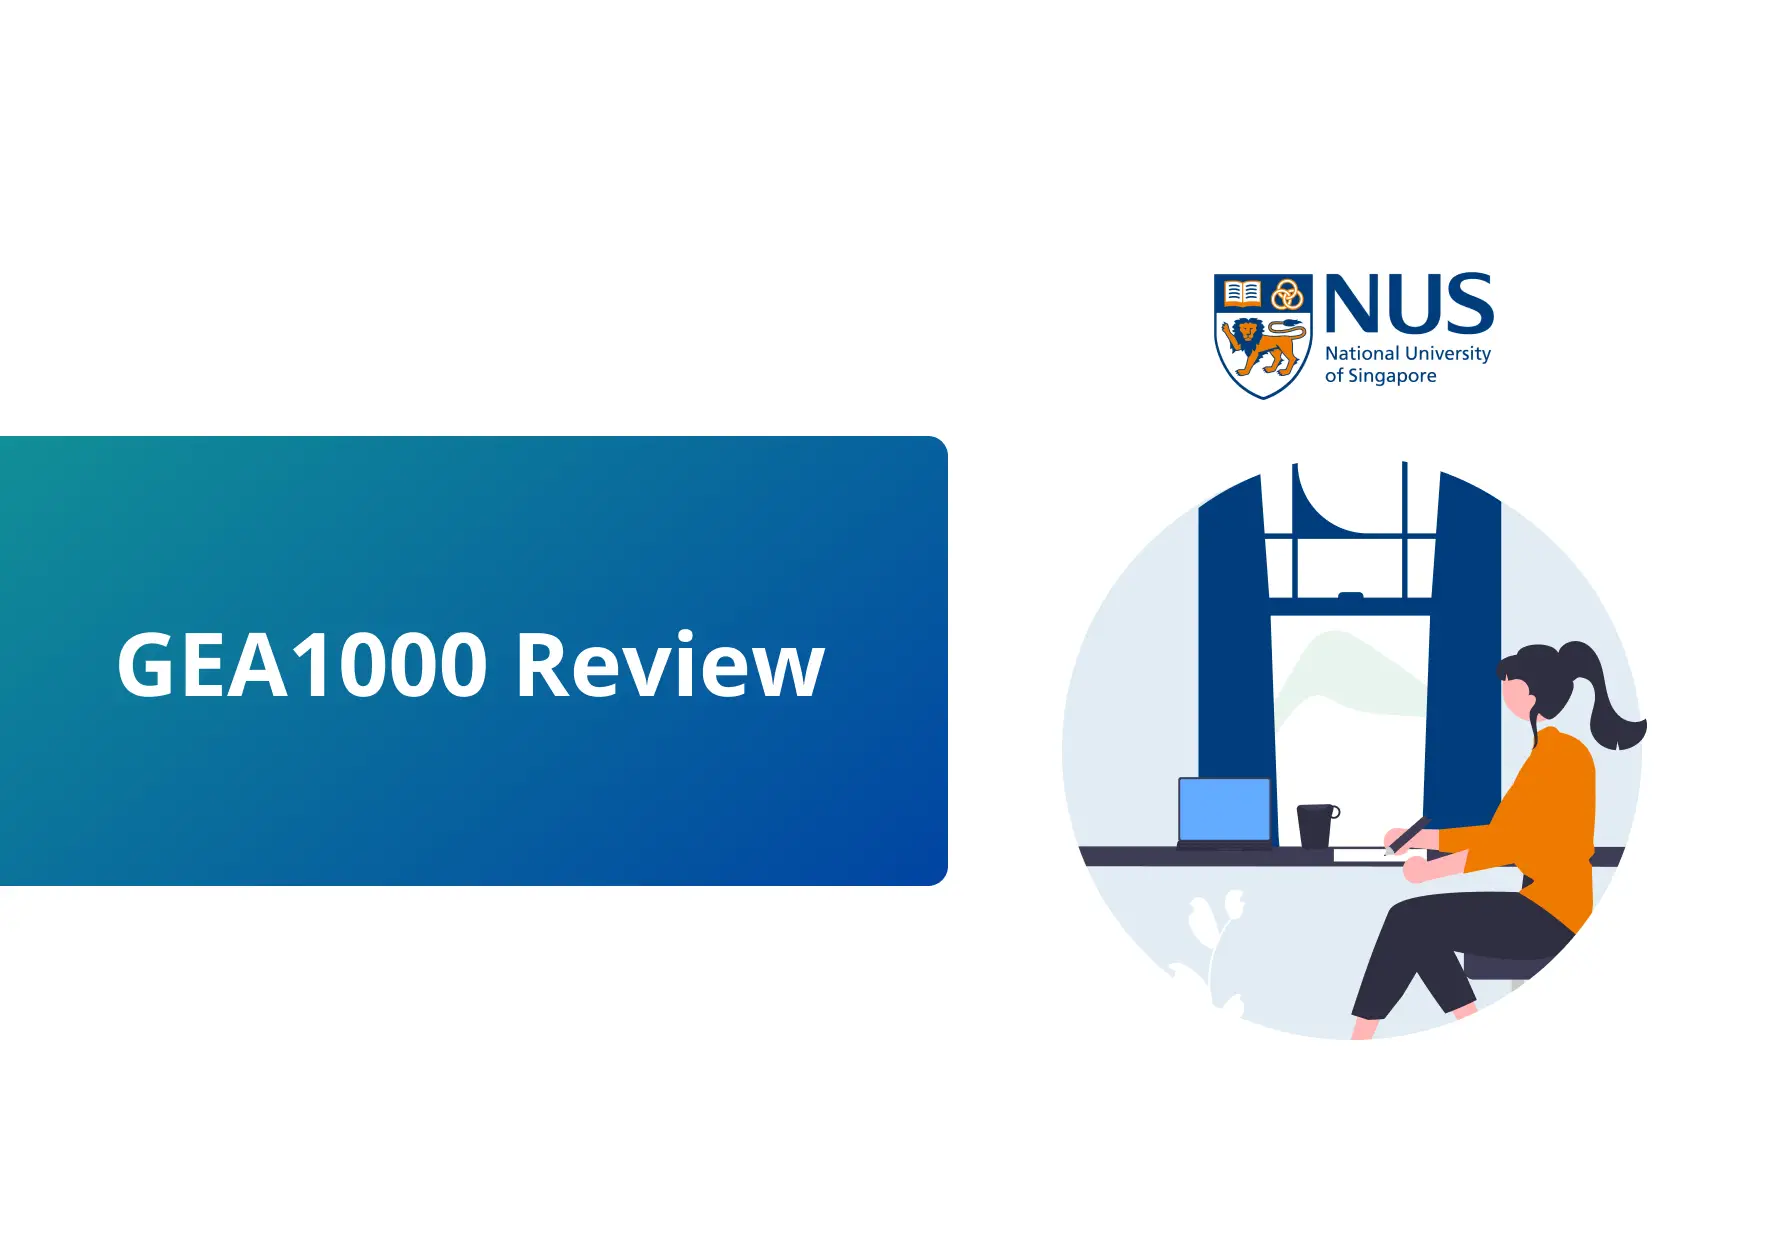 GEA1000 Review